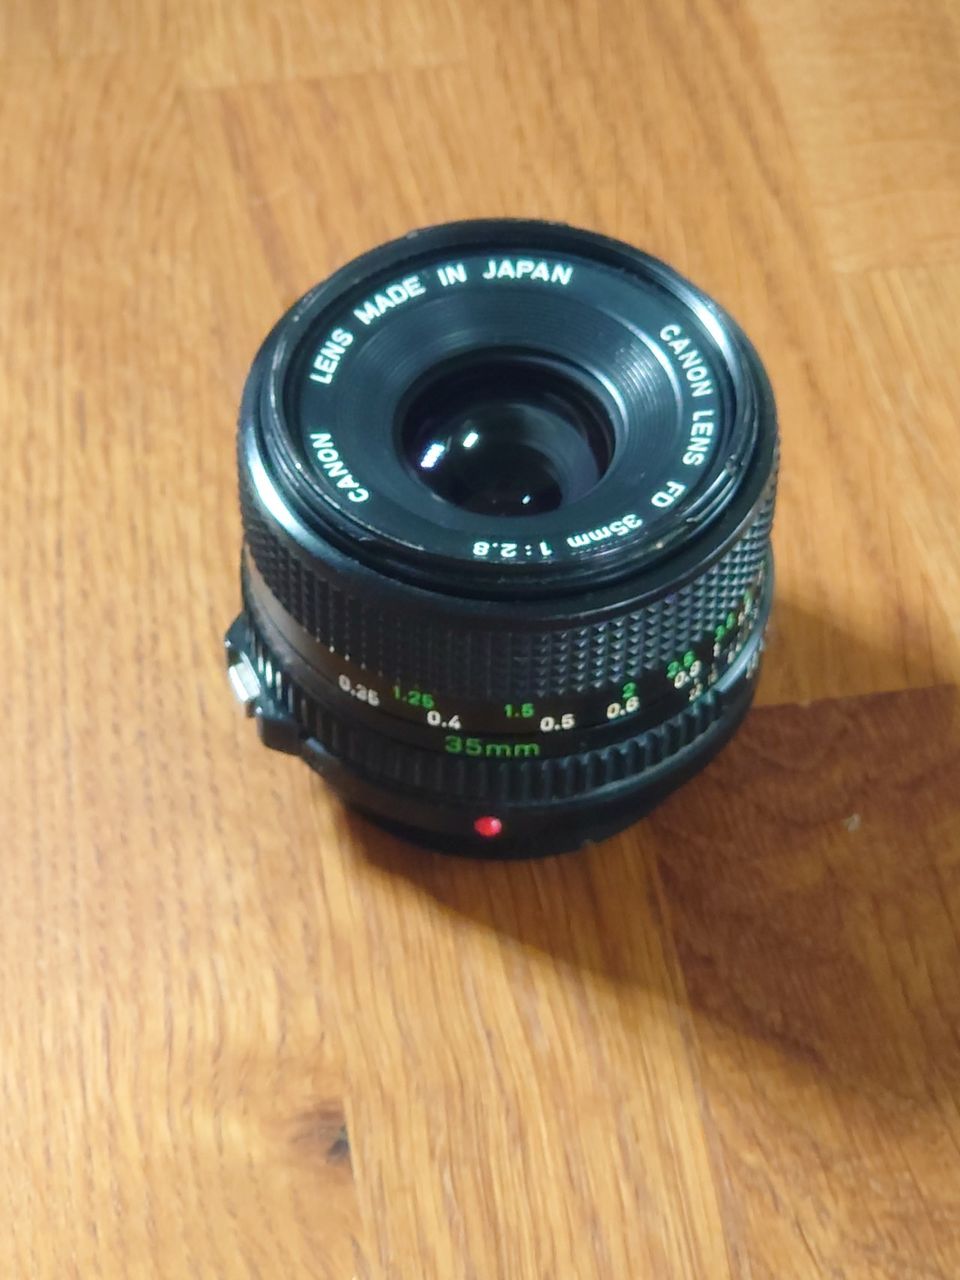 Canon lens FD 35mm 1:2.8